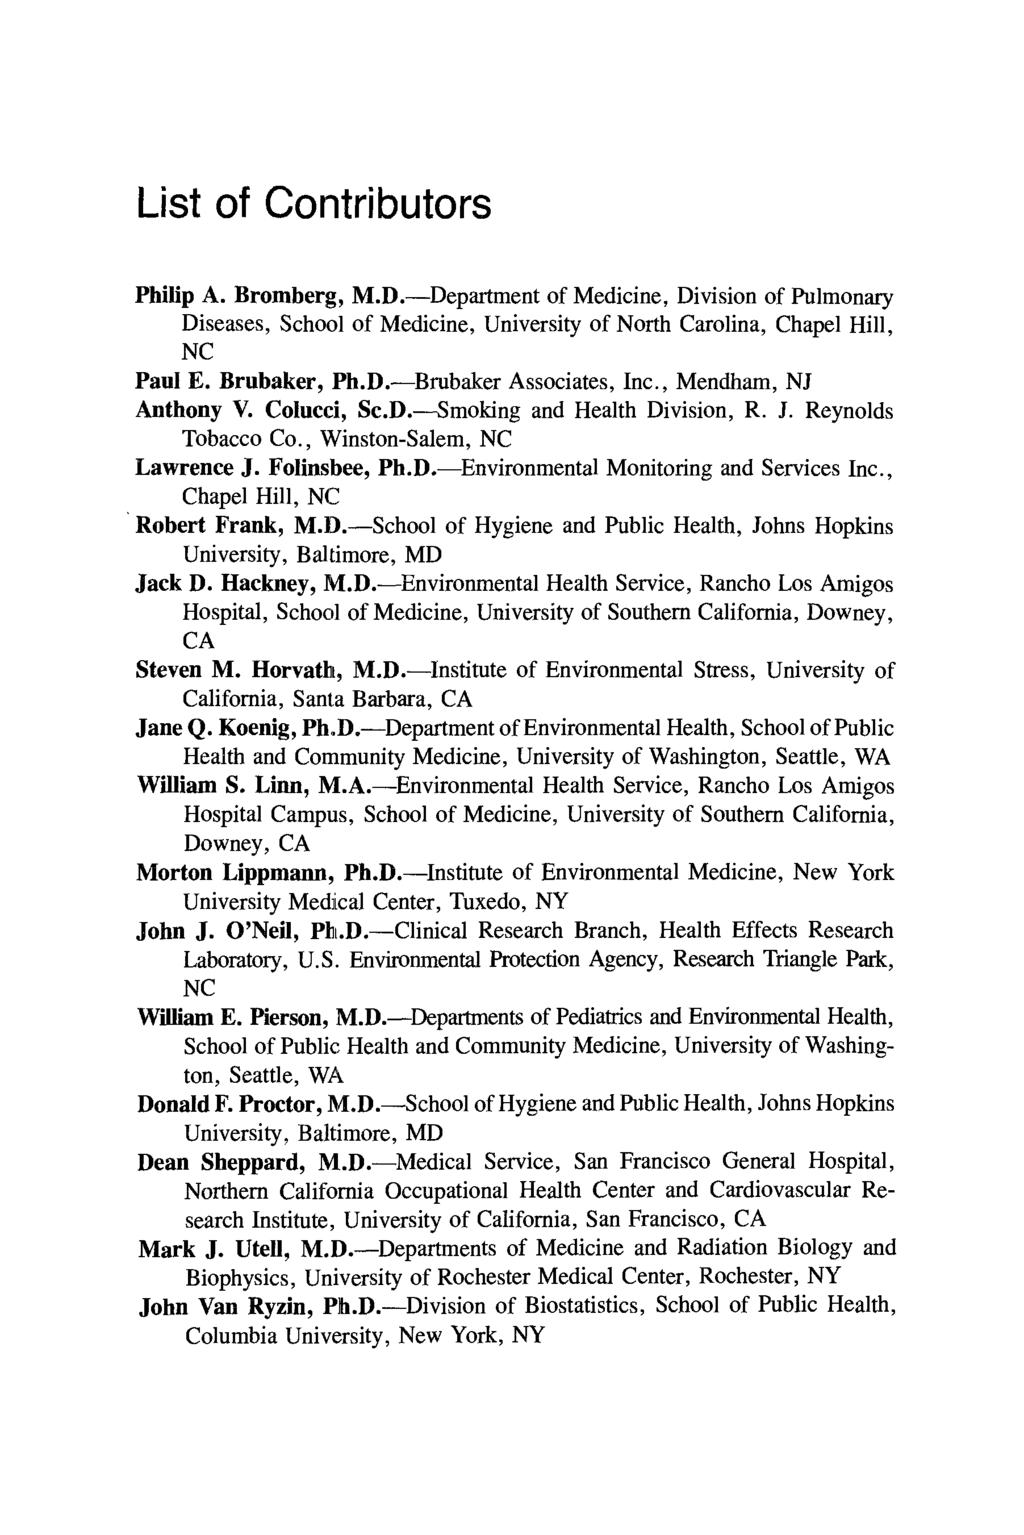 List of Contributors Philip A. Bromberg, M.D. ^Department of Medicine, Division of Pulmonary Diseases, Scliool of Medicine, University of North Carolina, Chapel Hill, NC Paul E. Brubaker, Ph.D. Brubaker Associates, Inc.